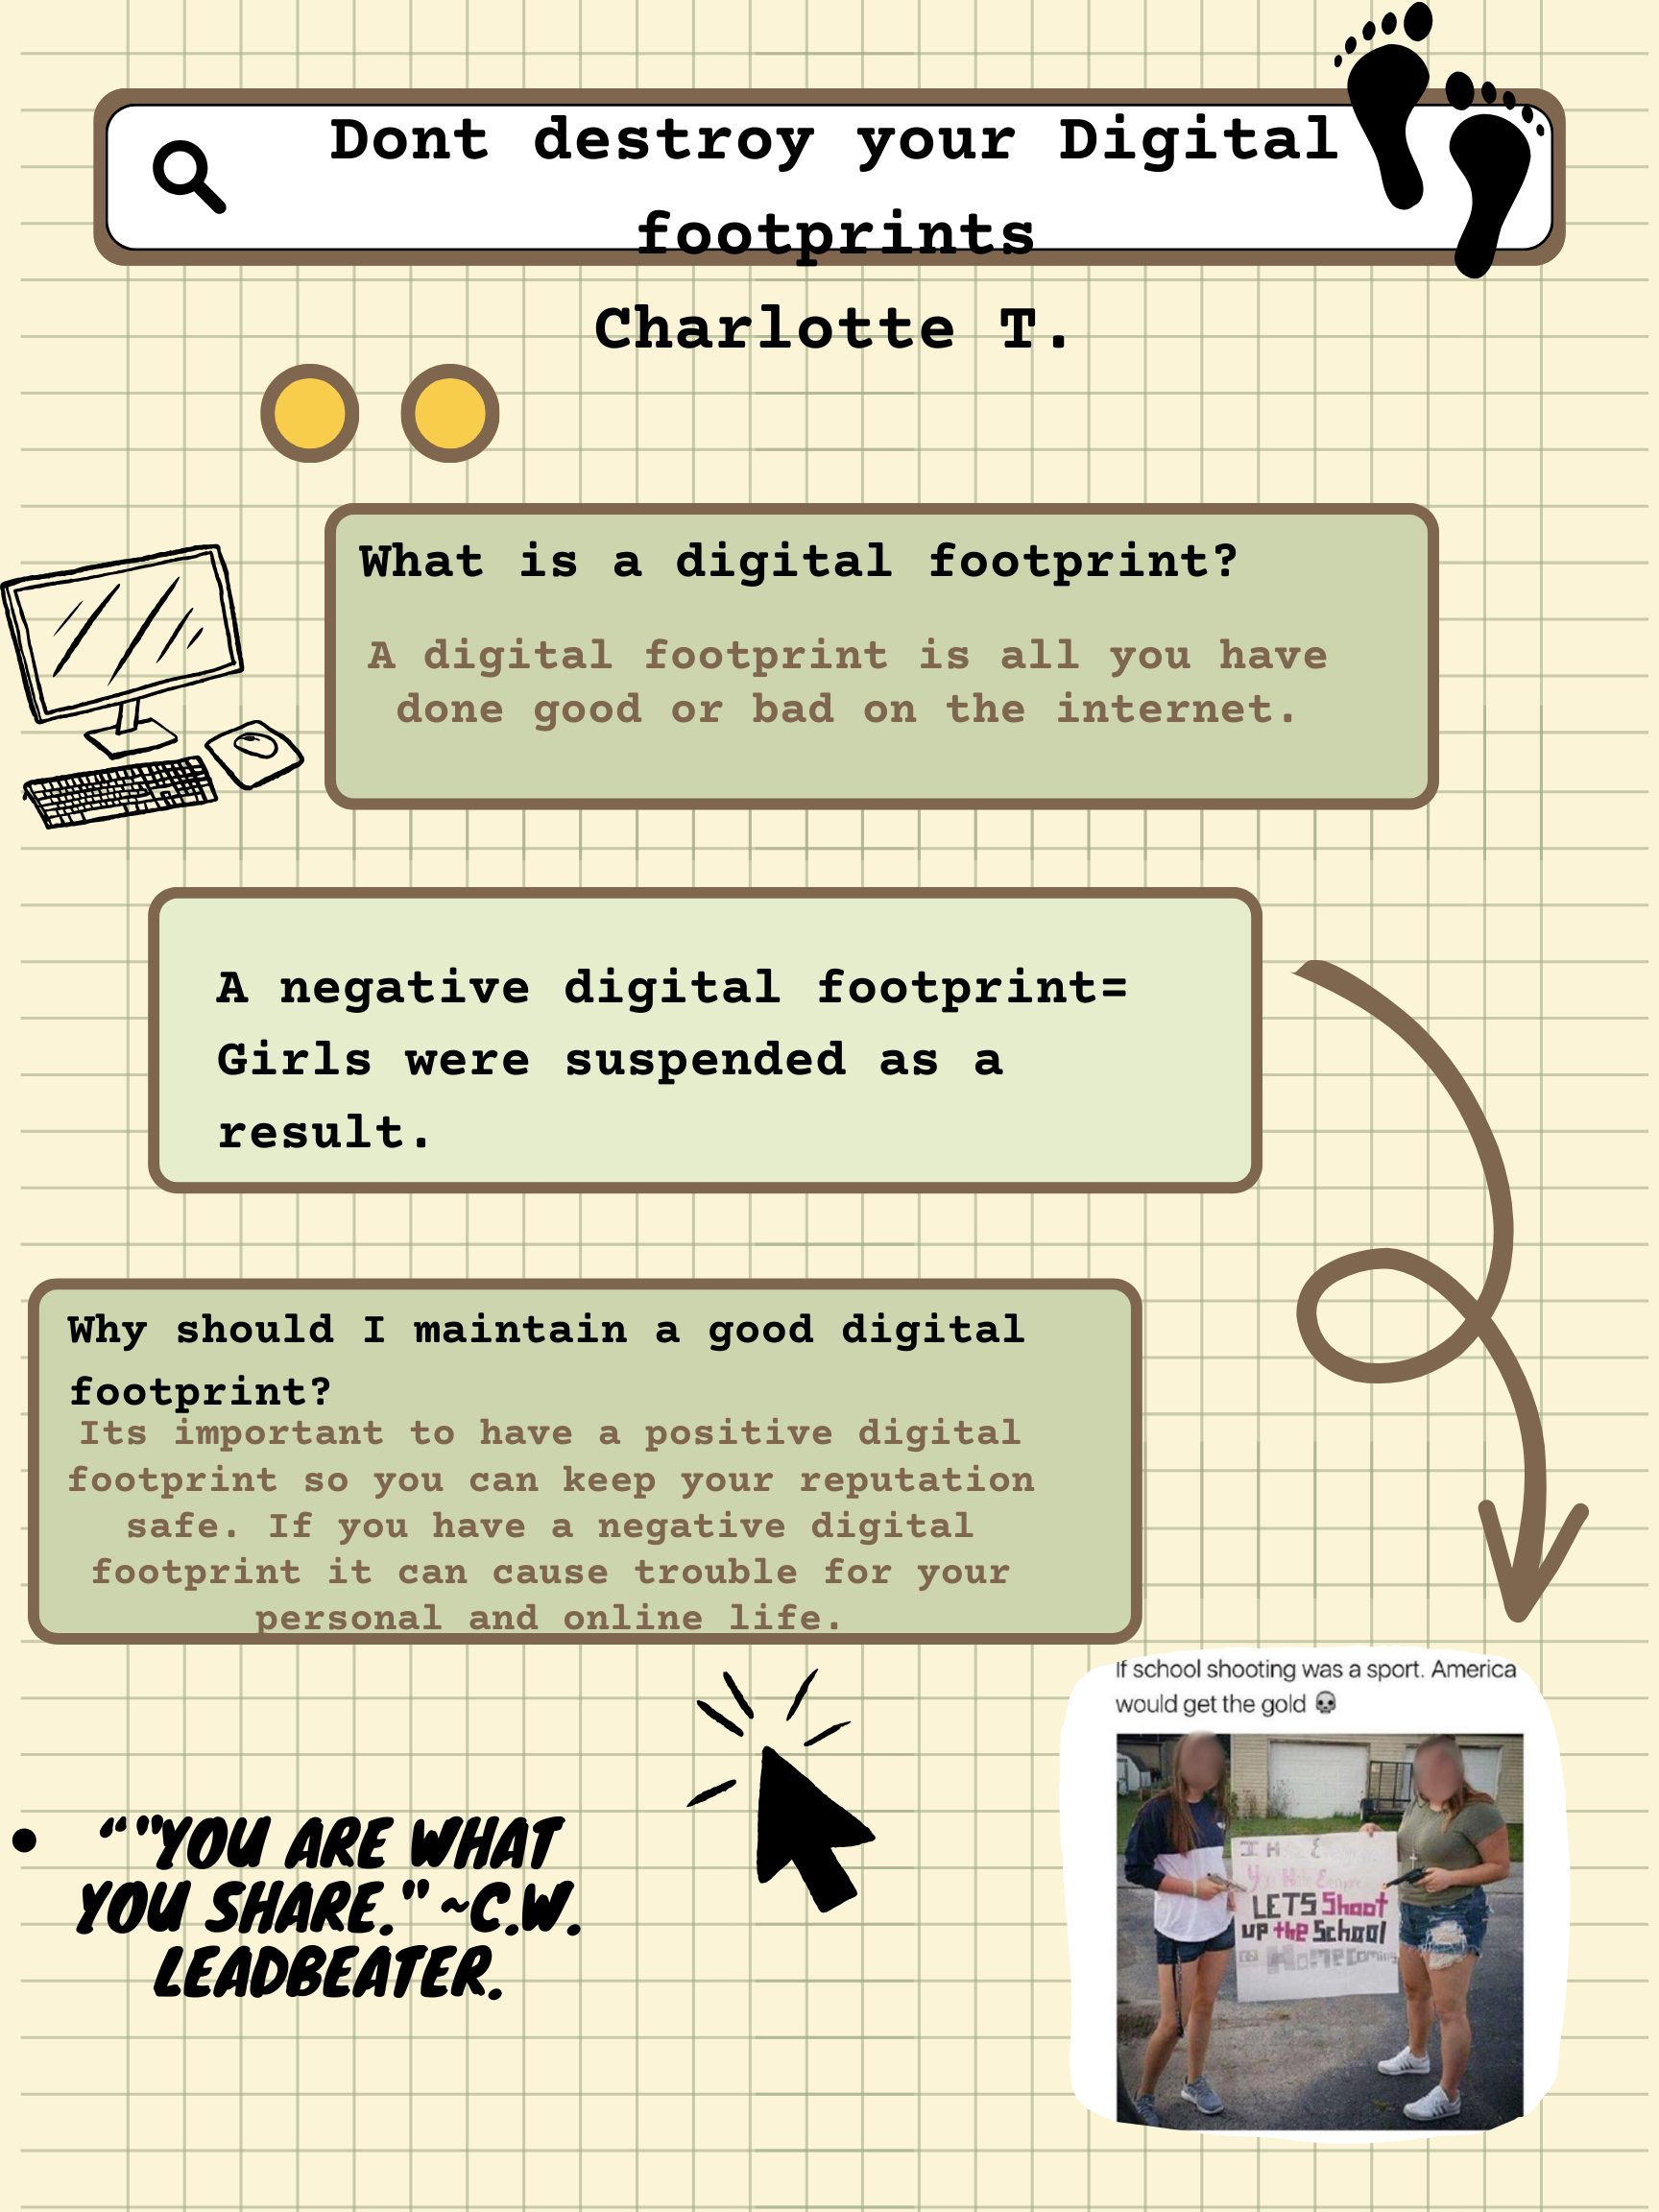 Digital Footprint Poster - Charlotte T